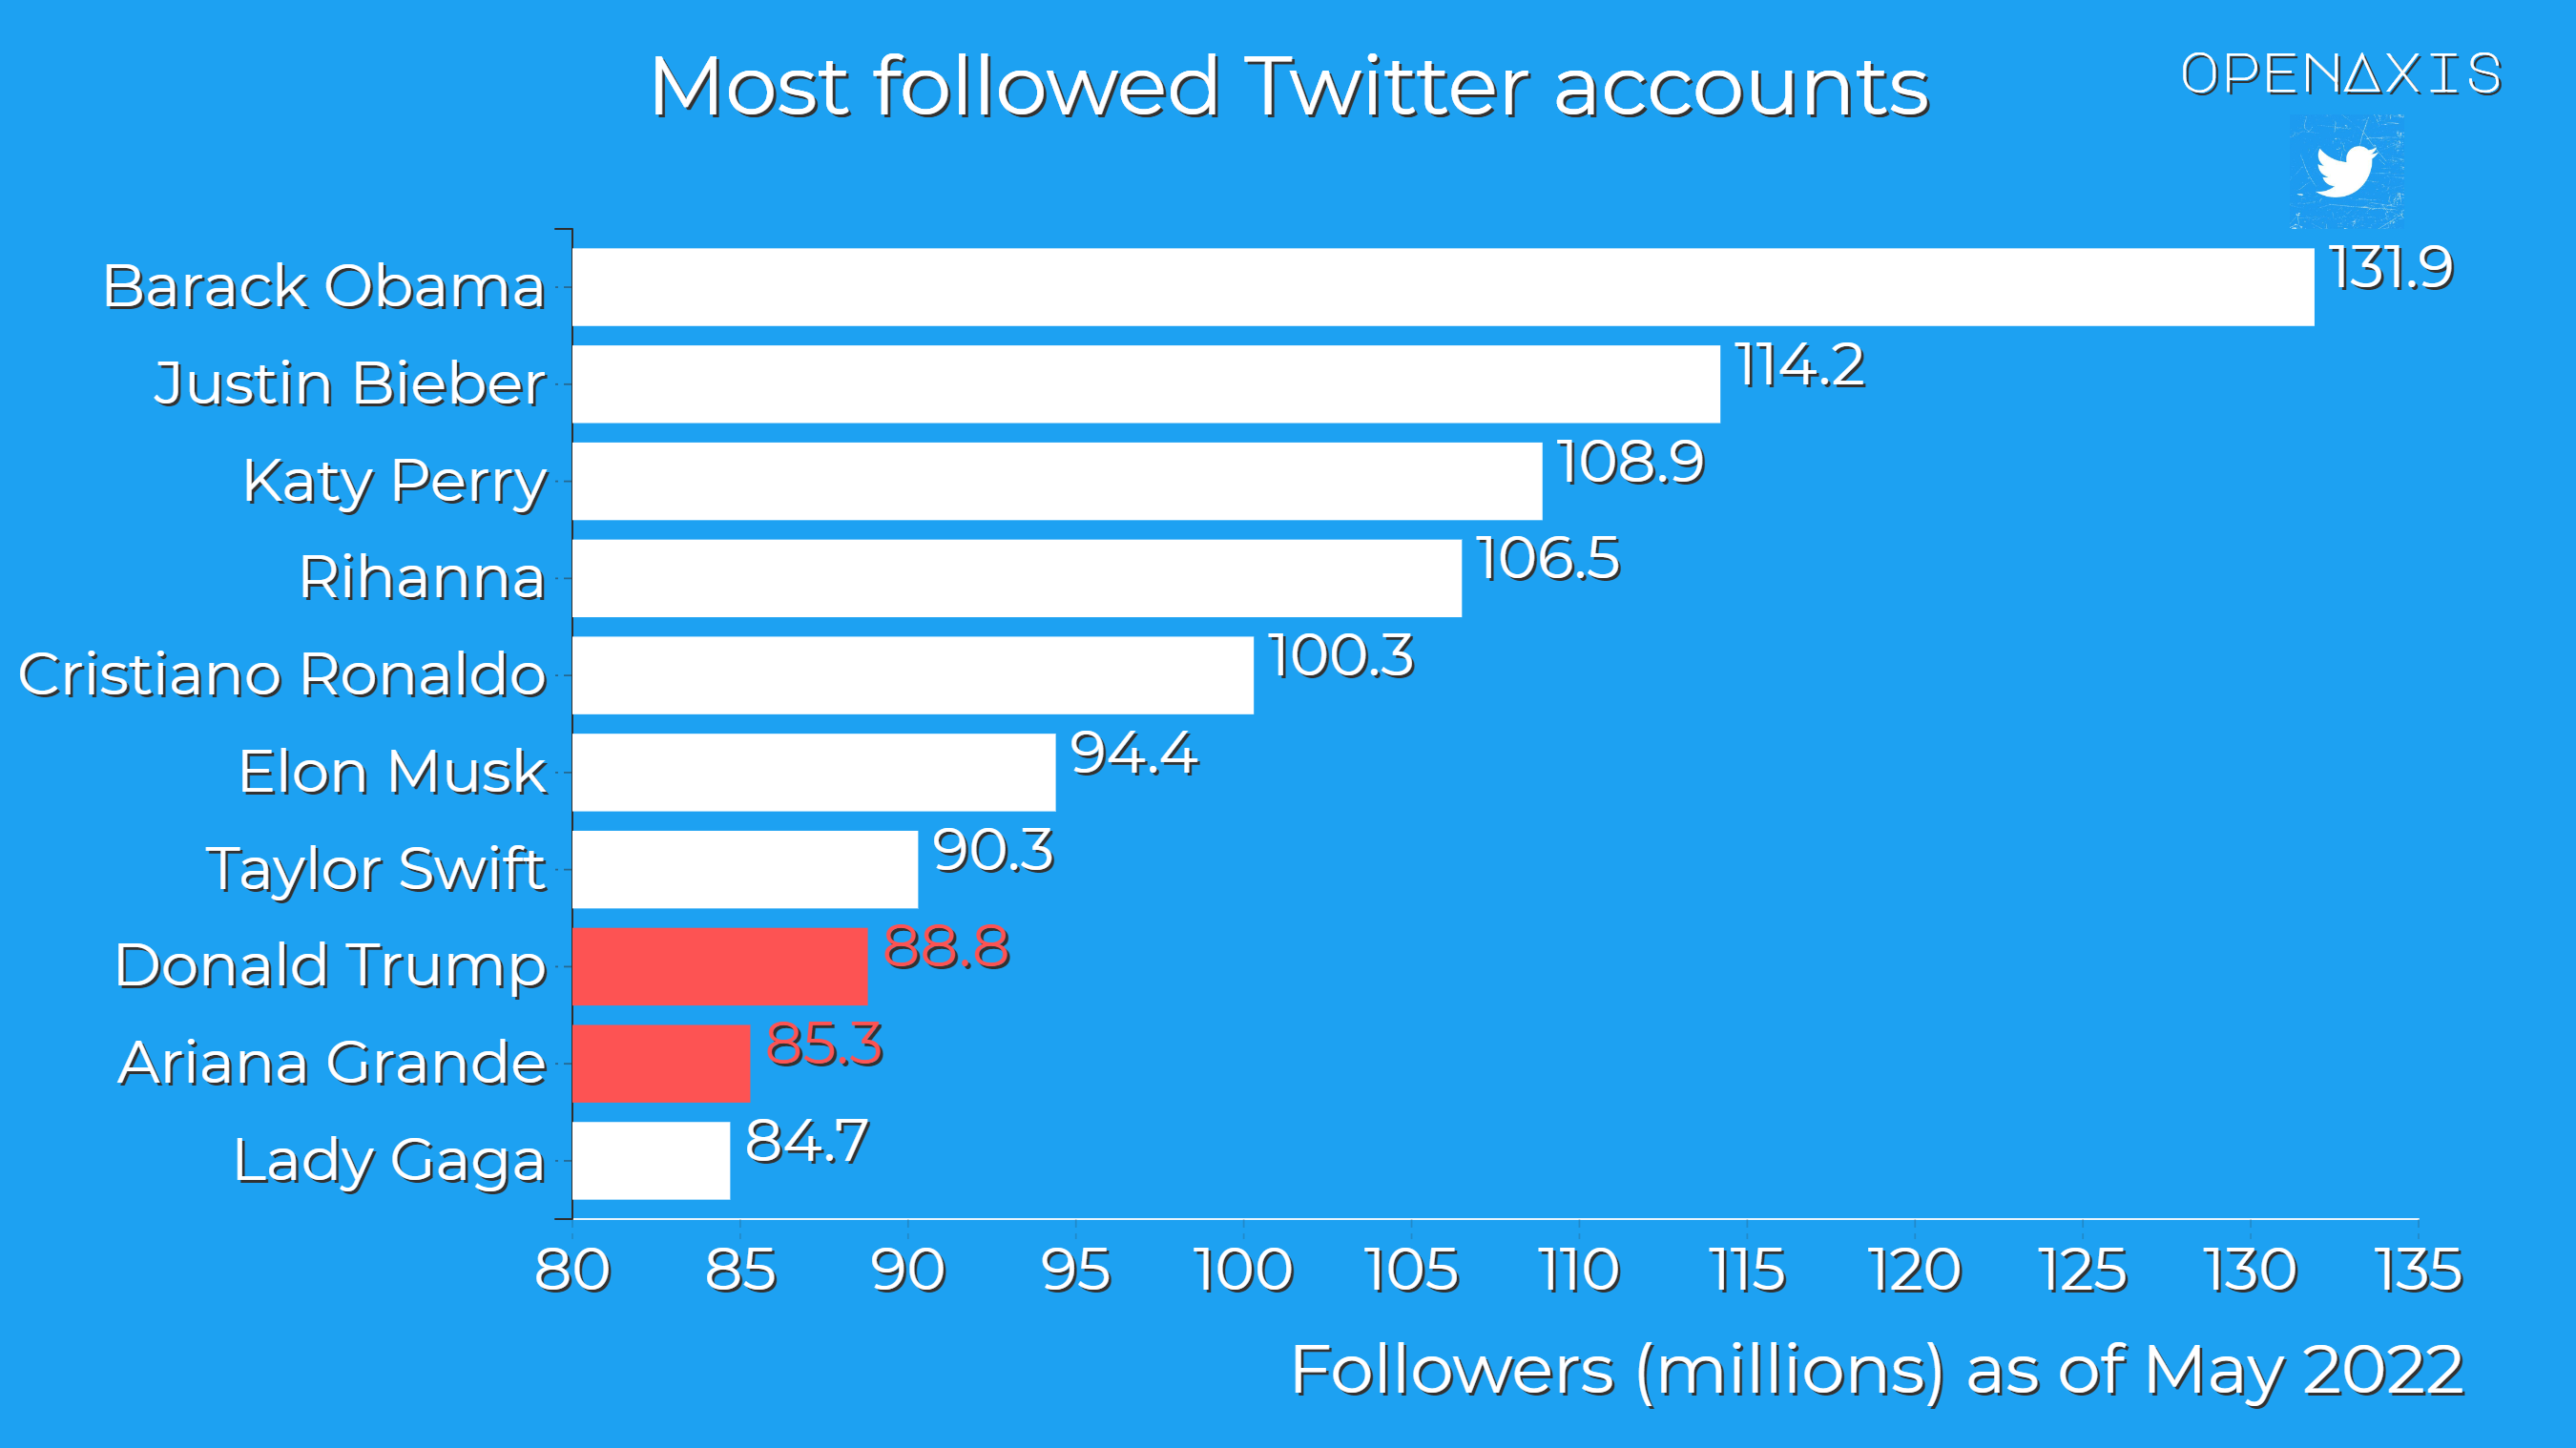 "Most followed Twitter accounts"